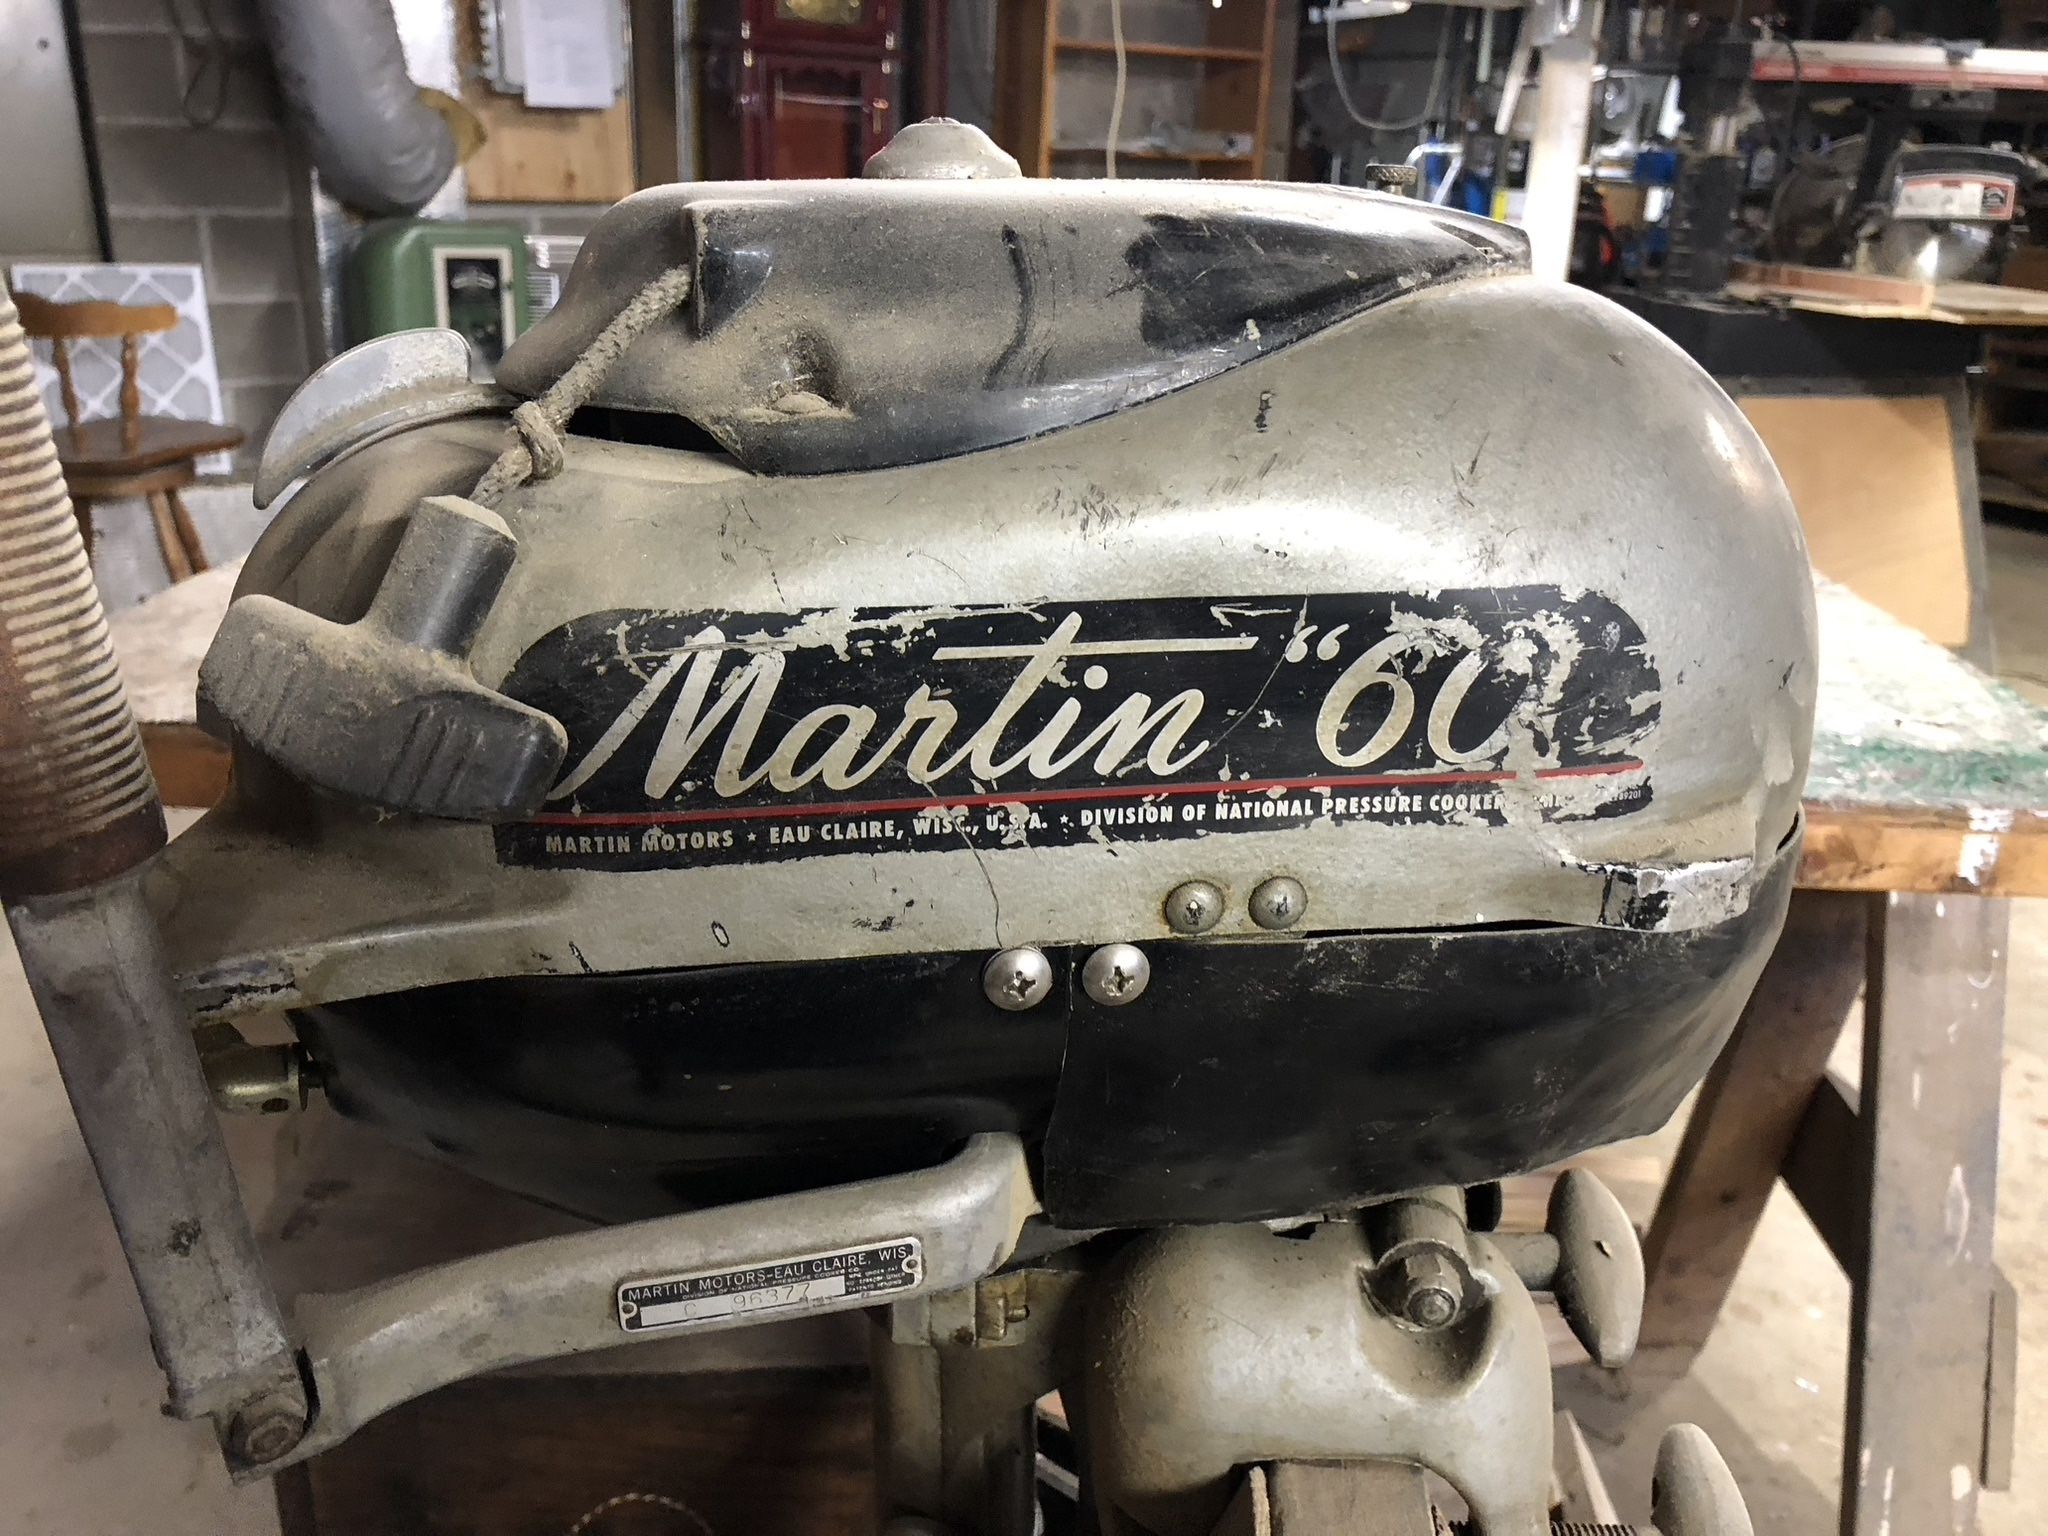 Martin 60 Outboard Motor